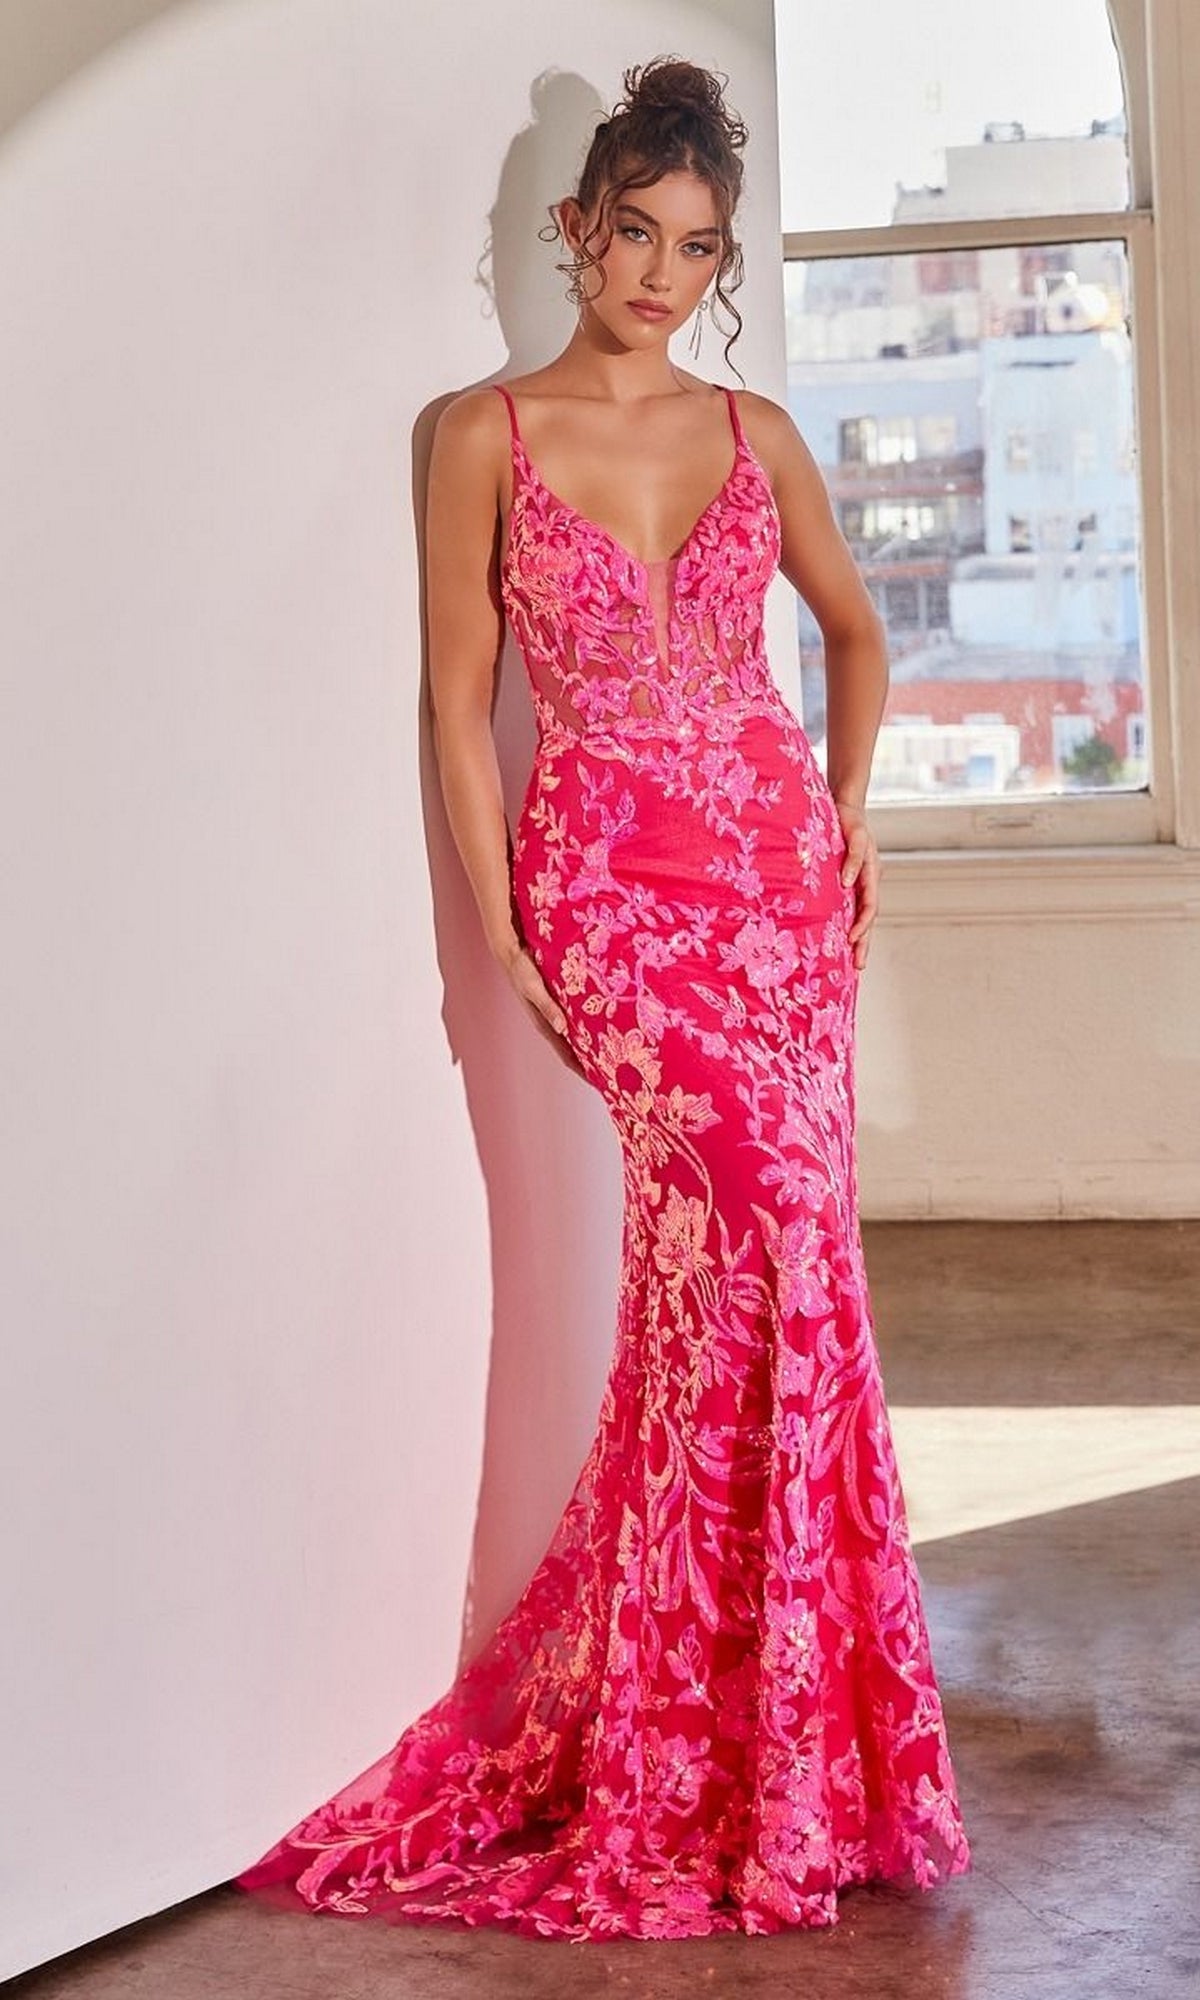 Pink Designer Dress for Any Occasion | NewYorkDress